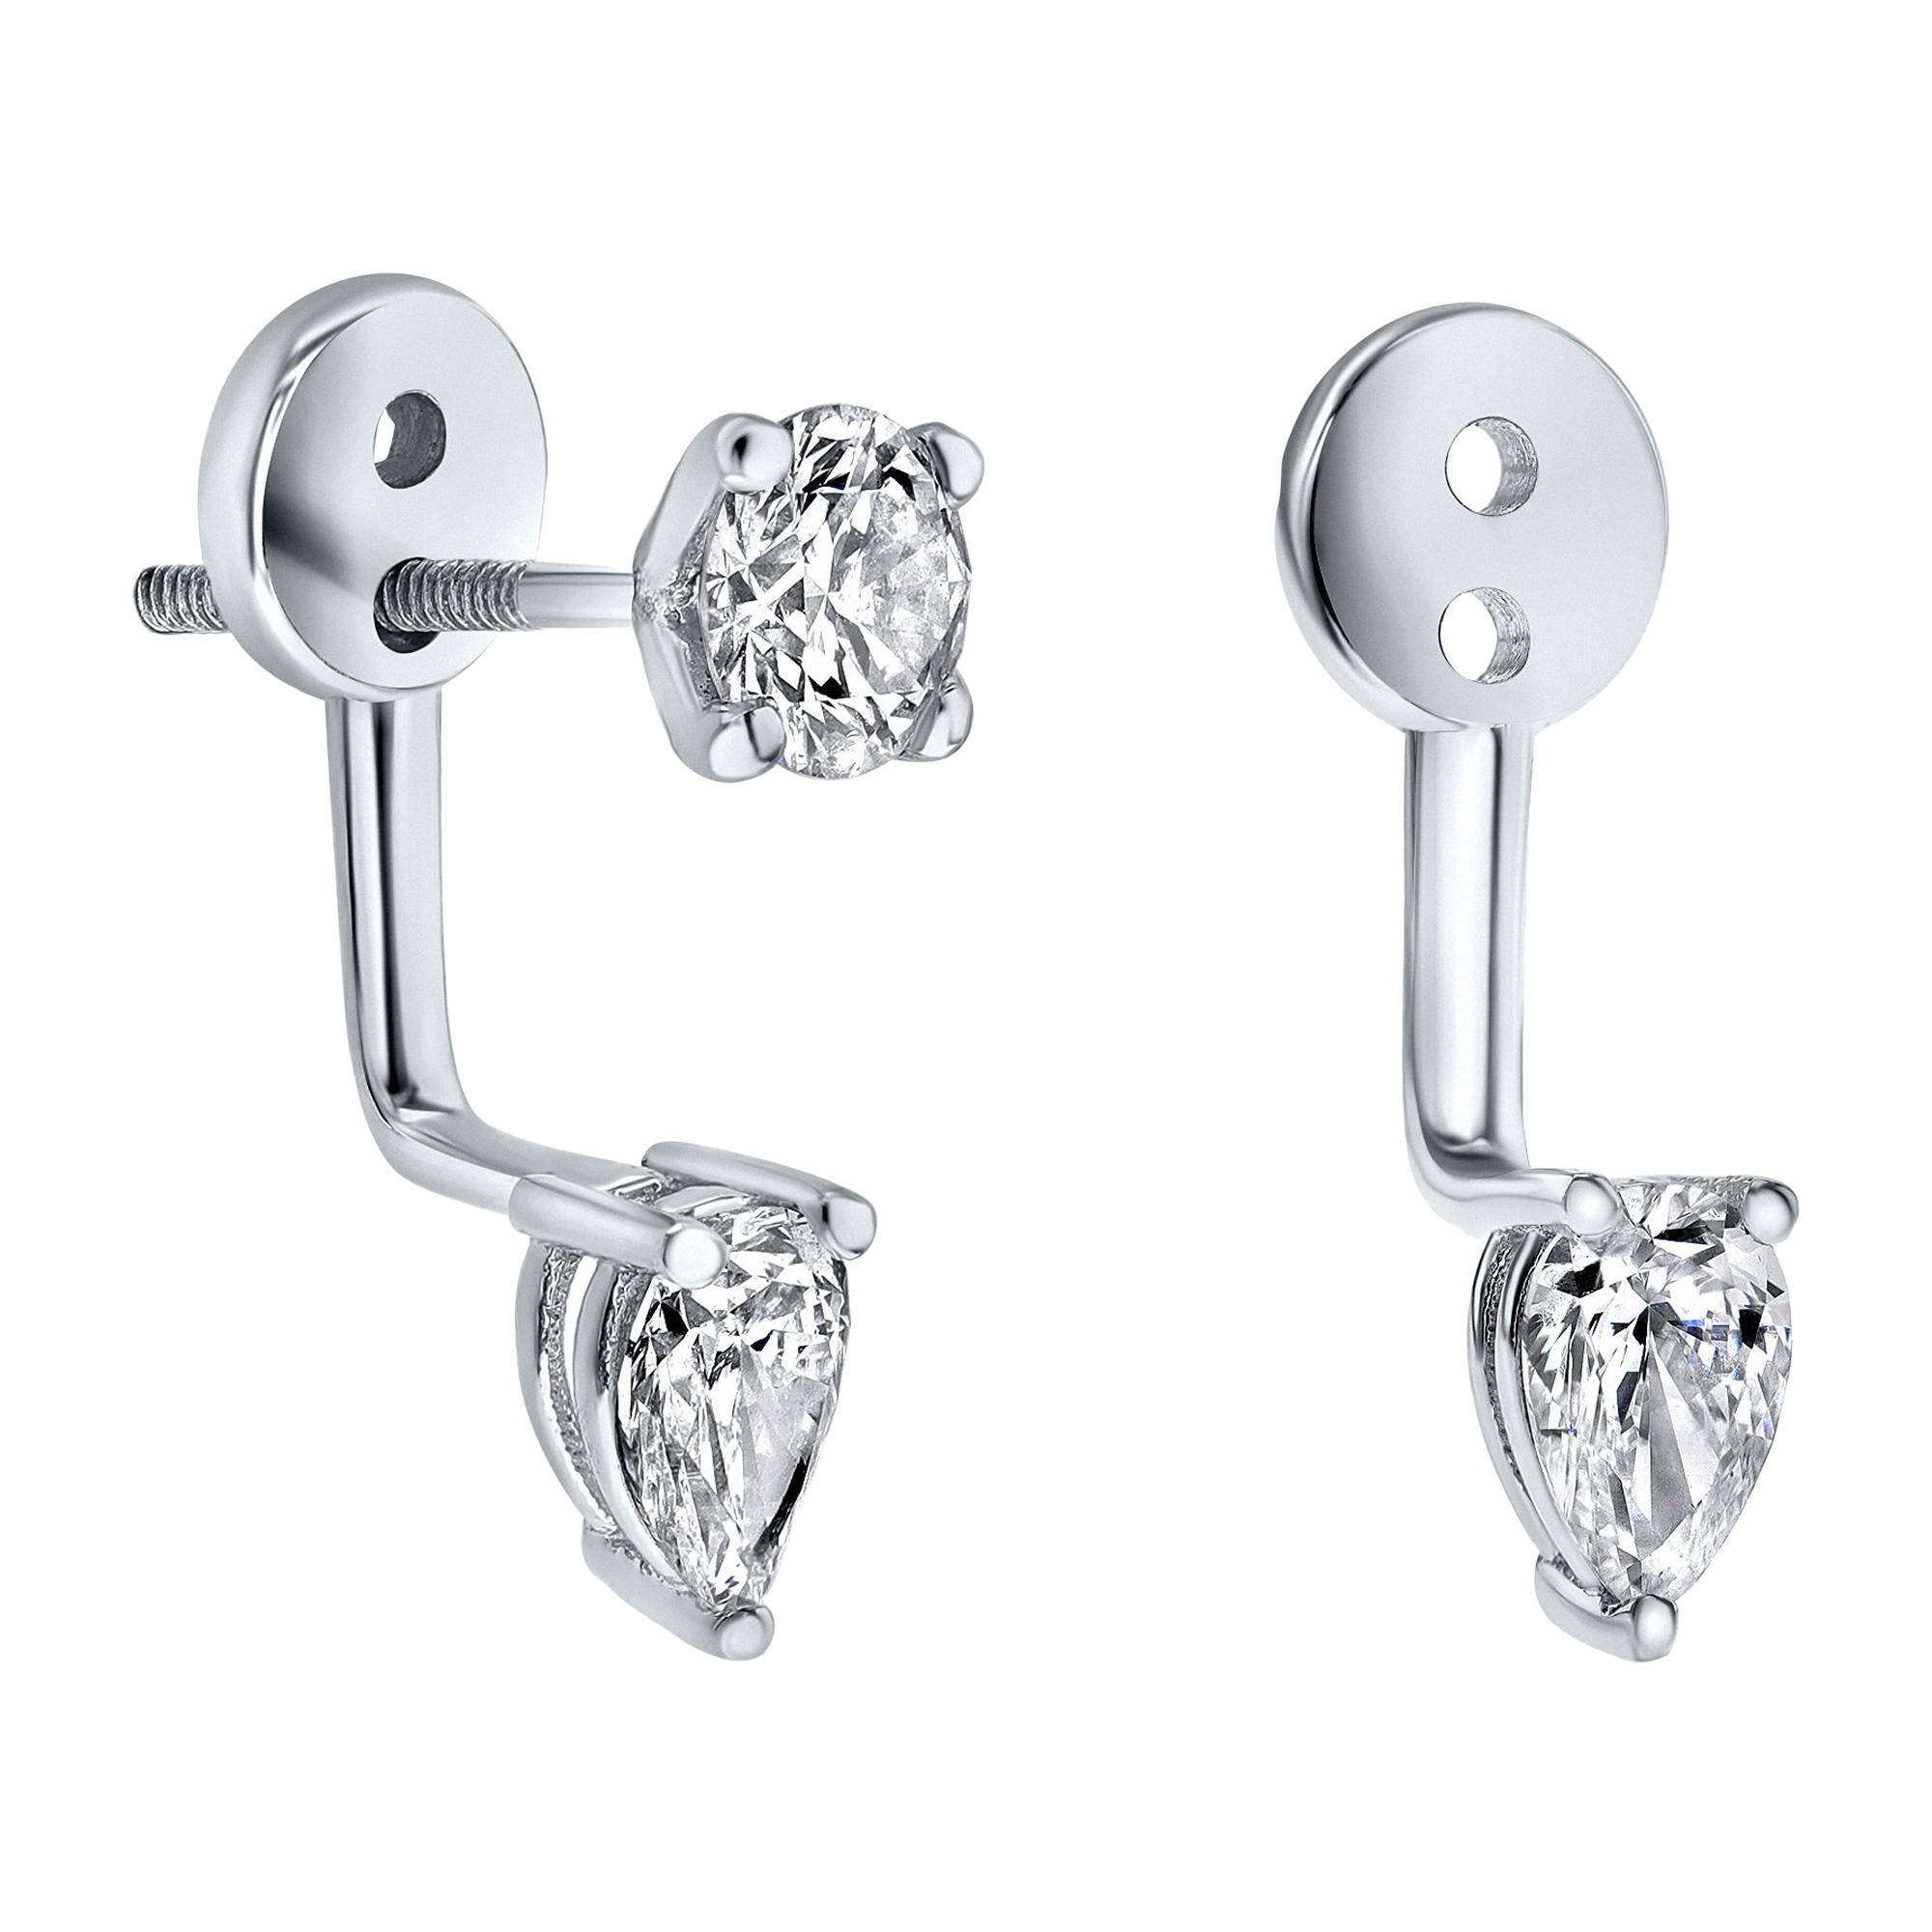 0.75 Carat Pear Shaped Diamond Earrings Set in 14K White Gold - Shlomit Rogel For Sale